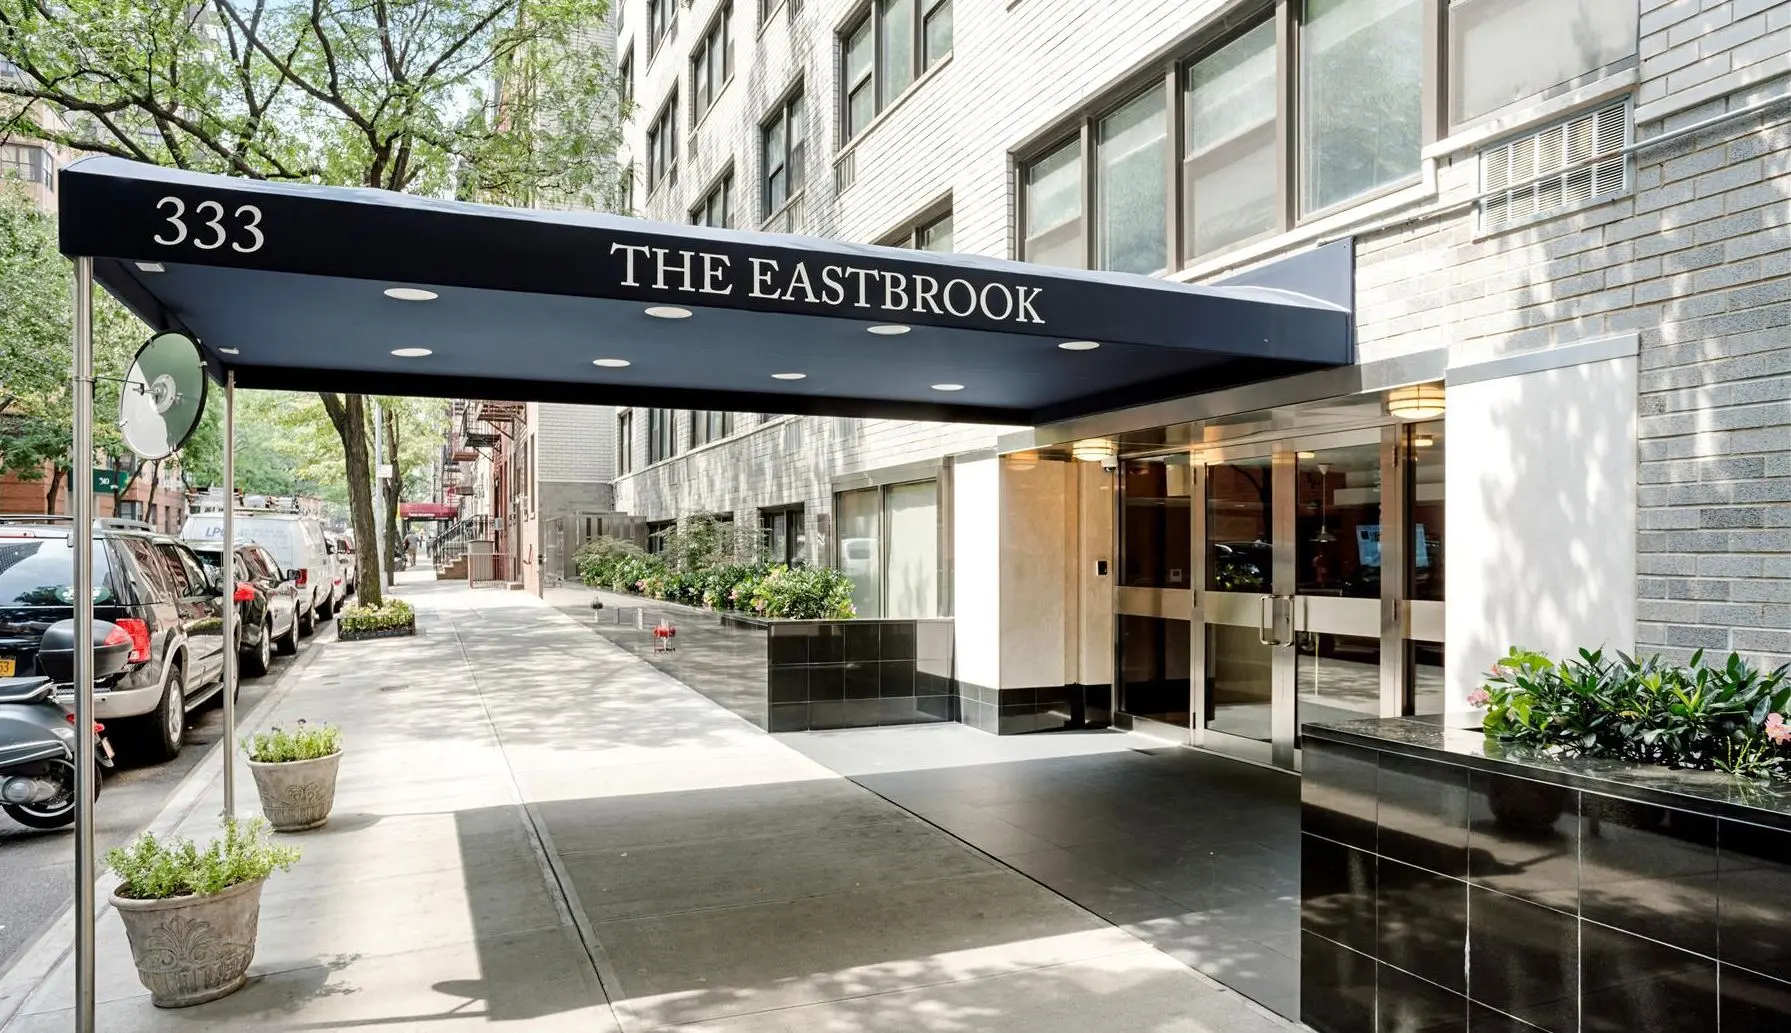 The Eastbrook, 333 East 75th Street